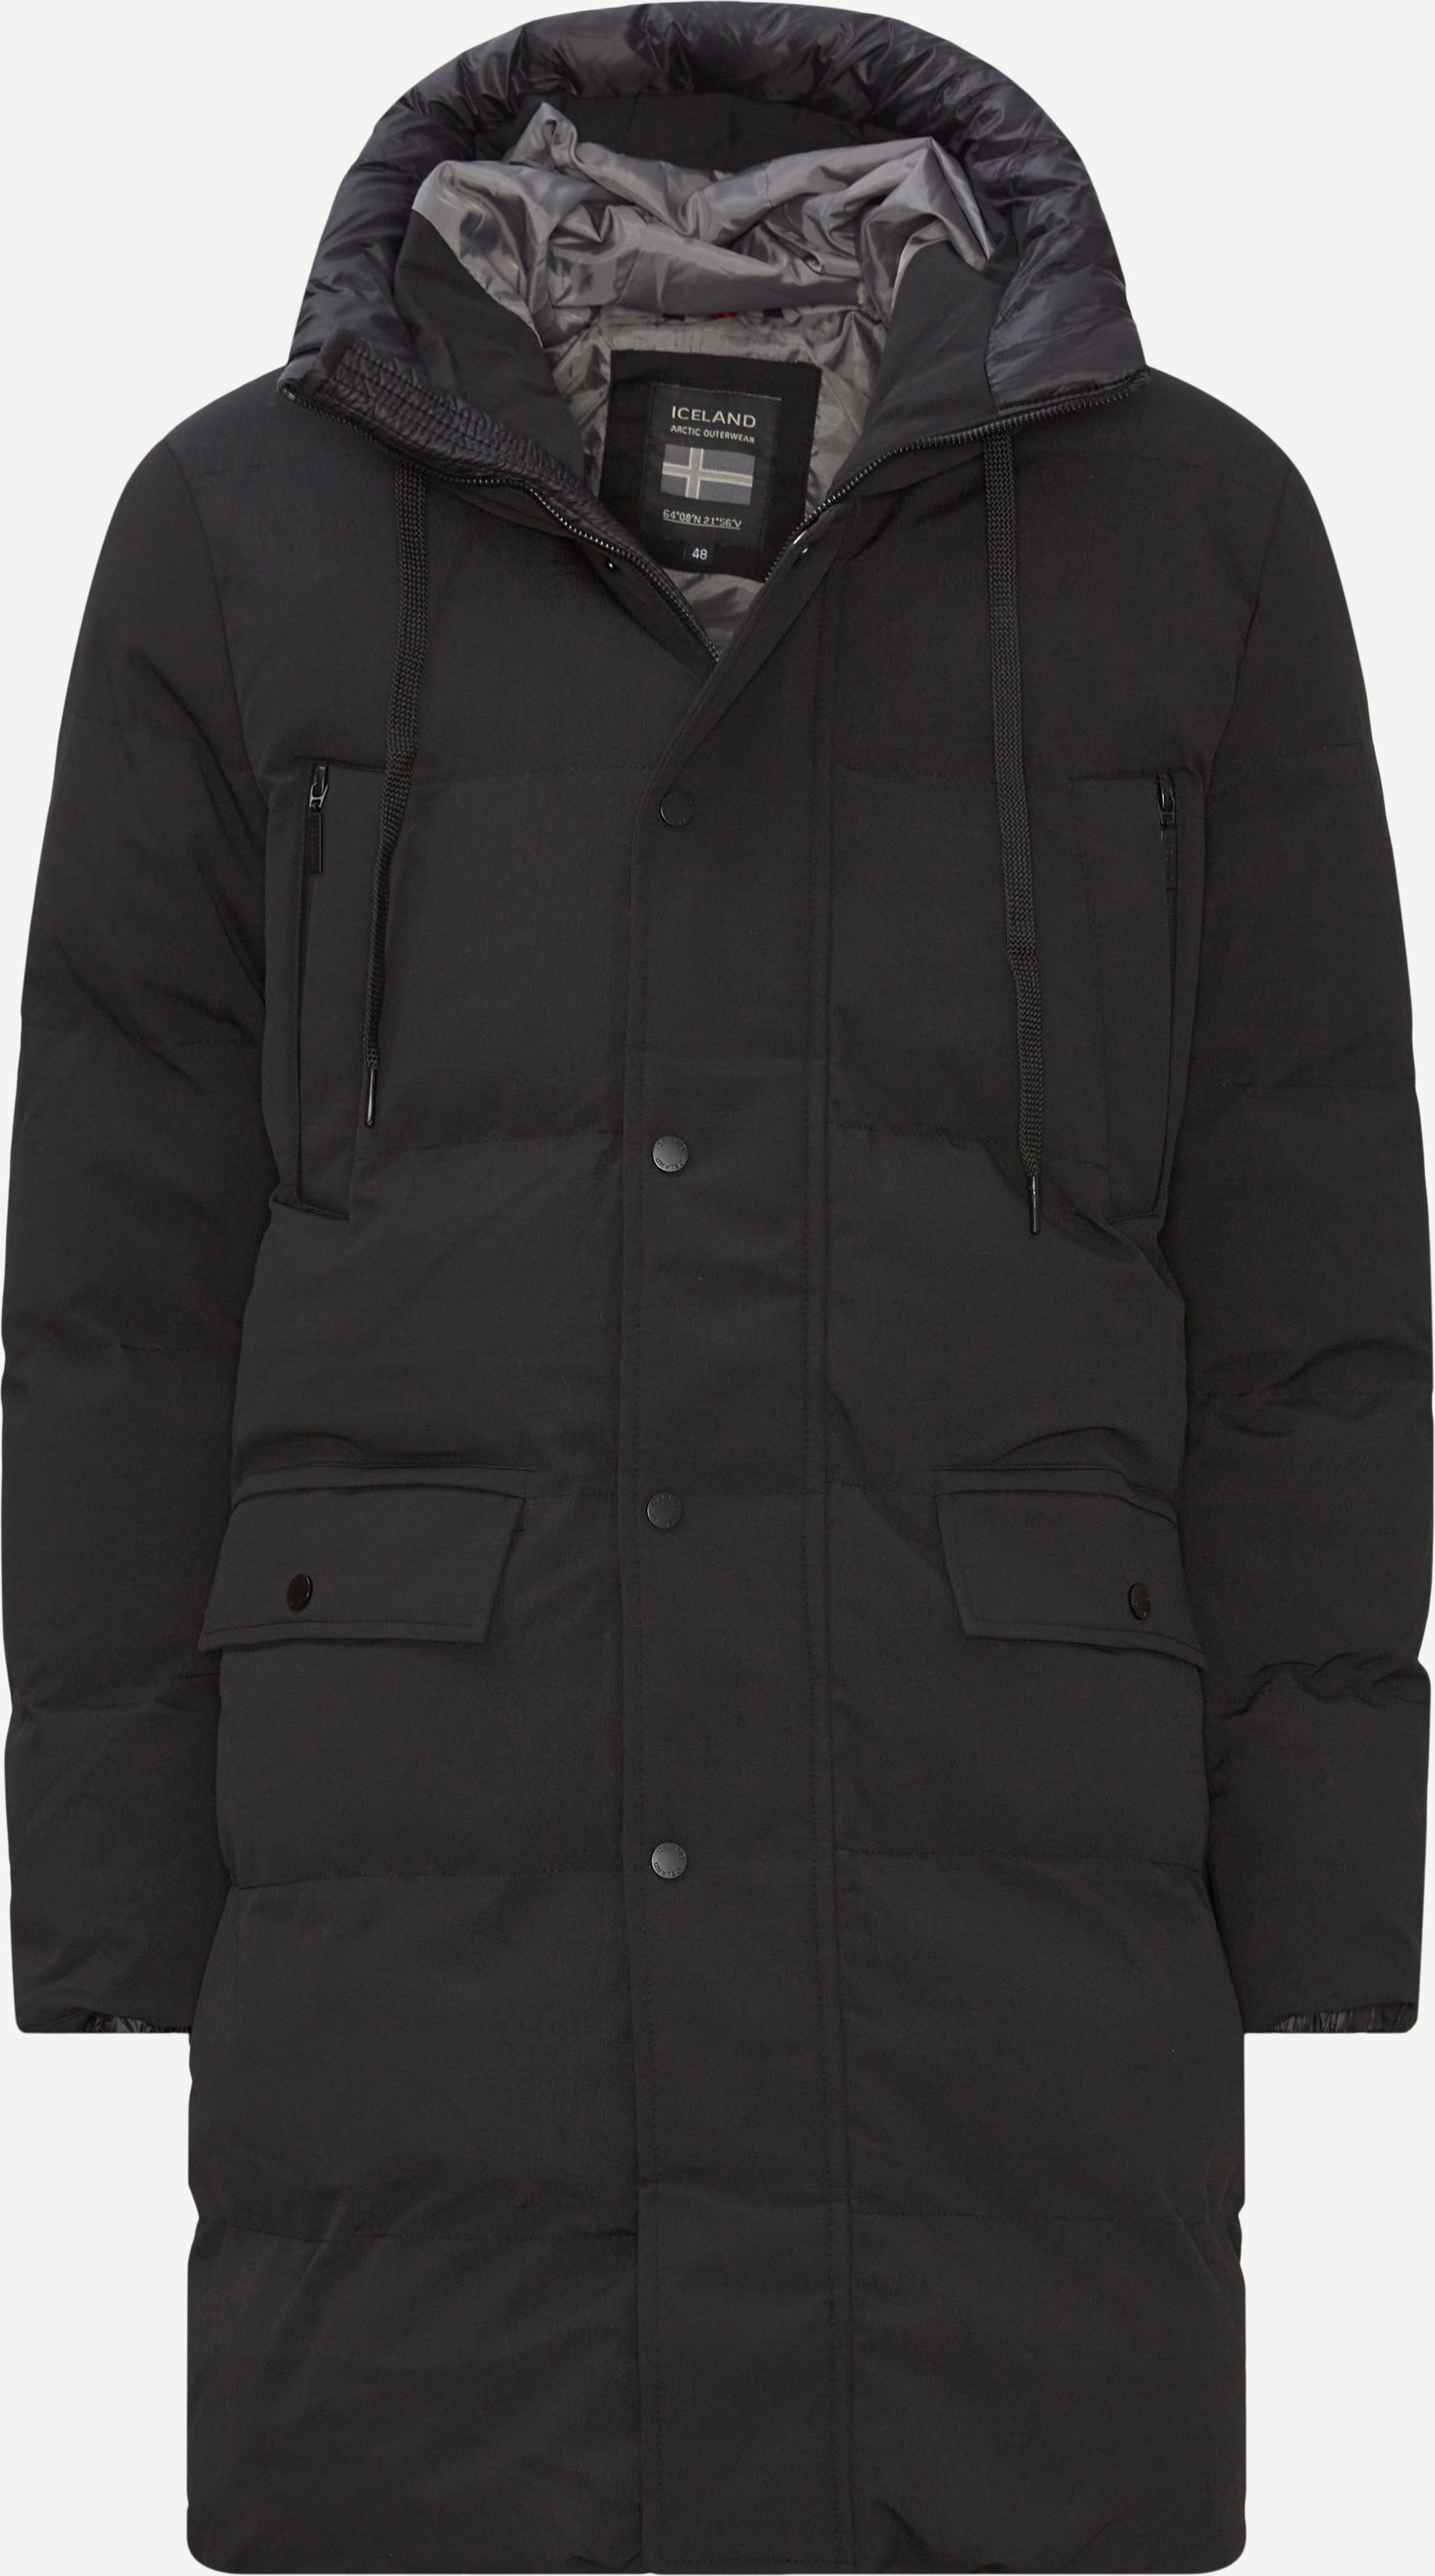 Jackets - Regular fit - Black